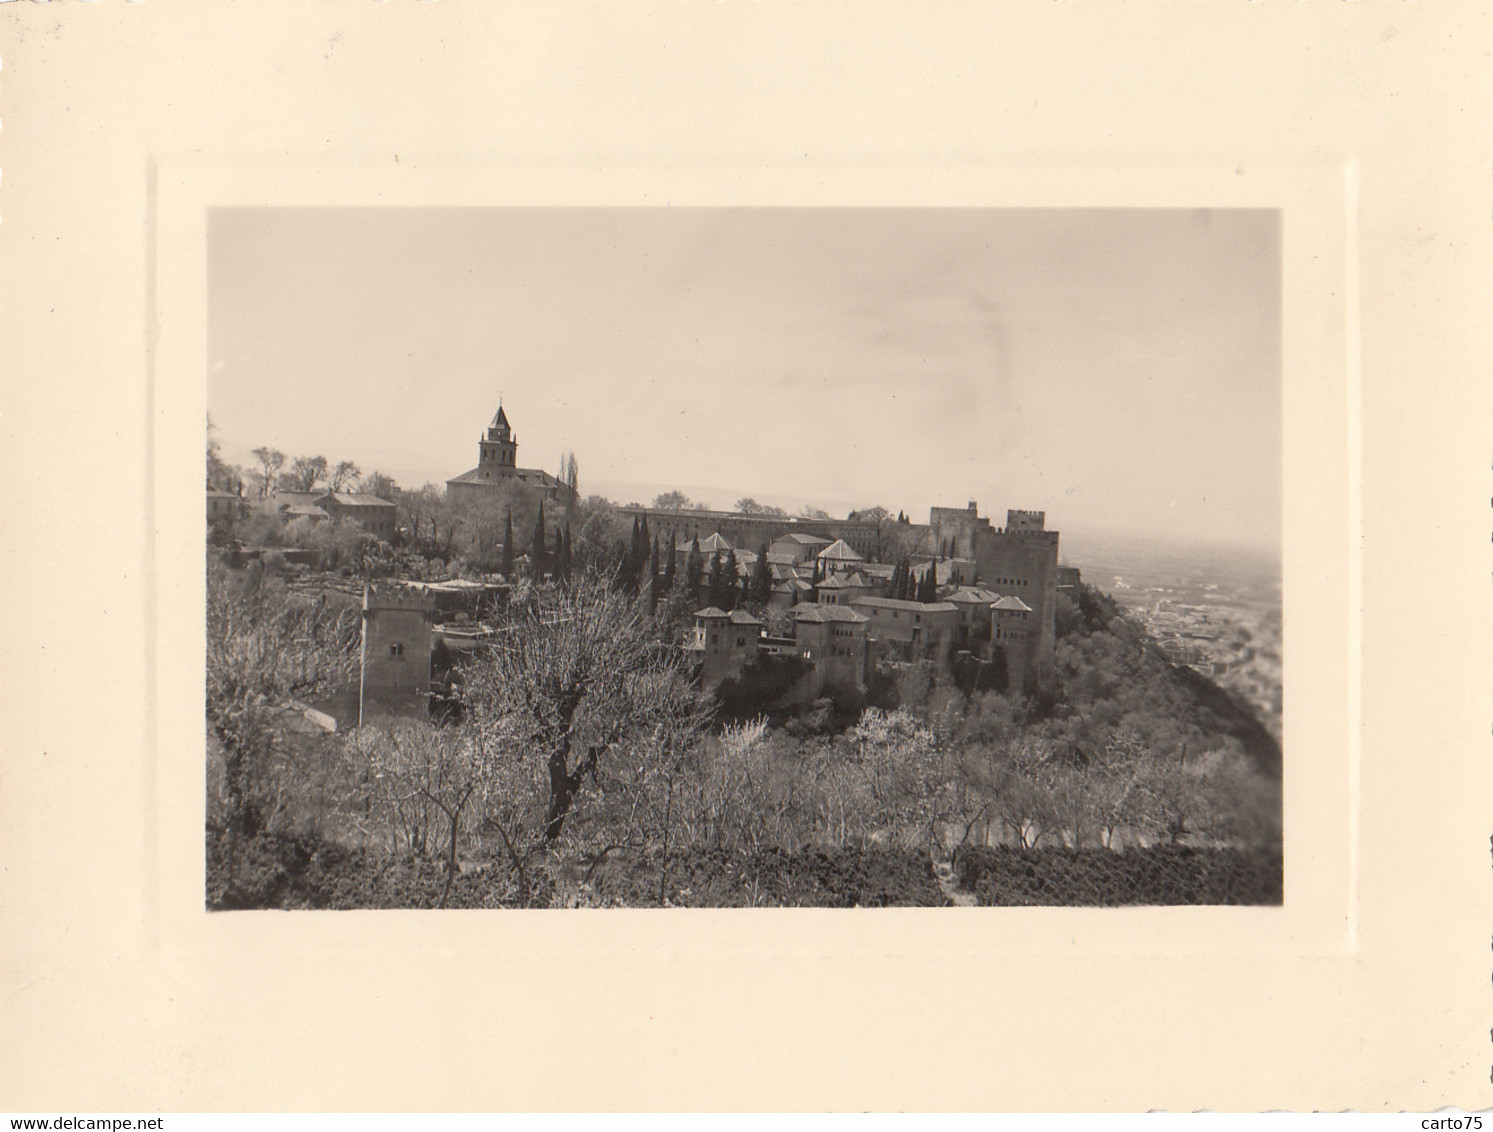 Photographie - Espagne - Grenade - L'Alhambra Vue Du Généralife - Fotografie